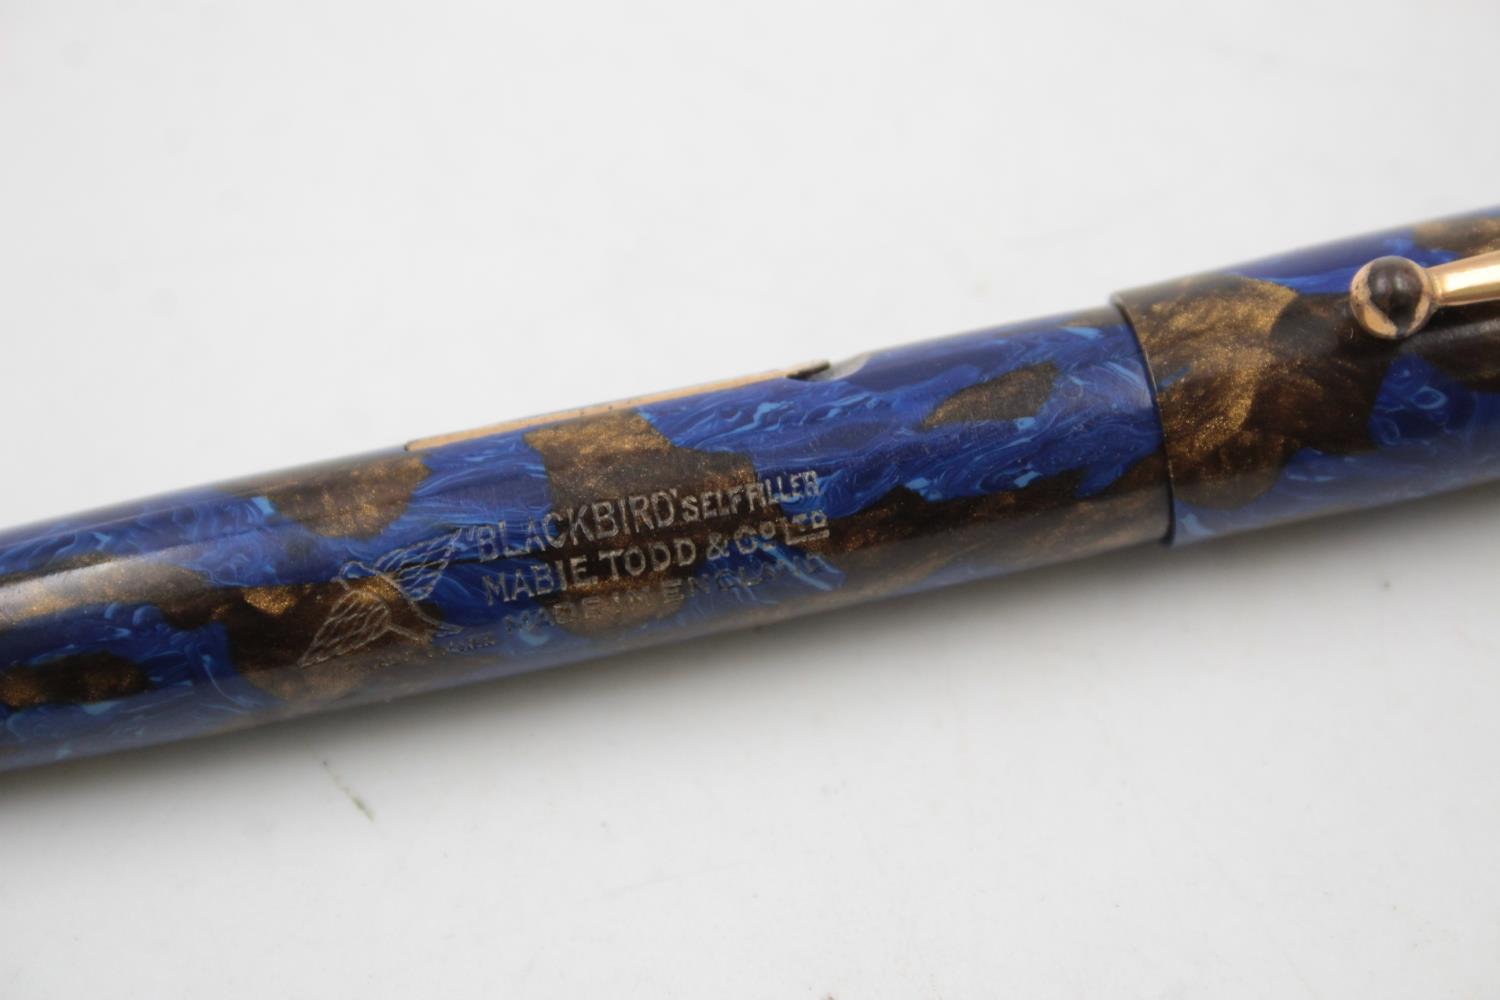 Vintage MABIE TODD Blackbird Blue Fountain Pen w/ 14ct Gold Nib WRITING - Image 4 of 7